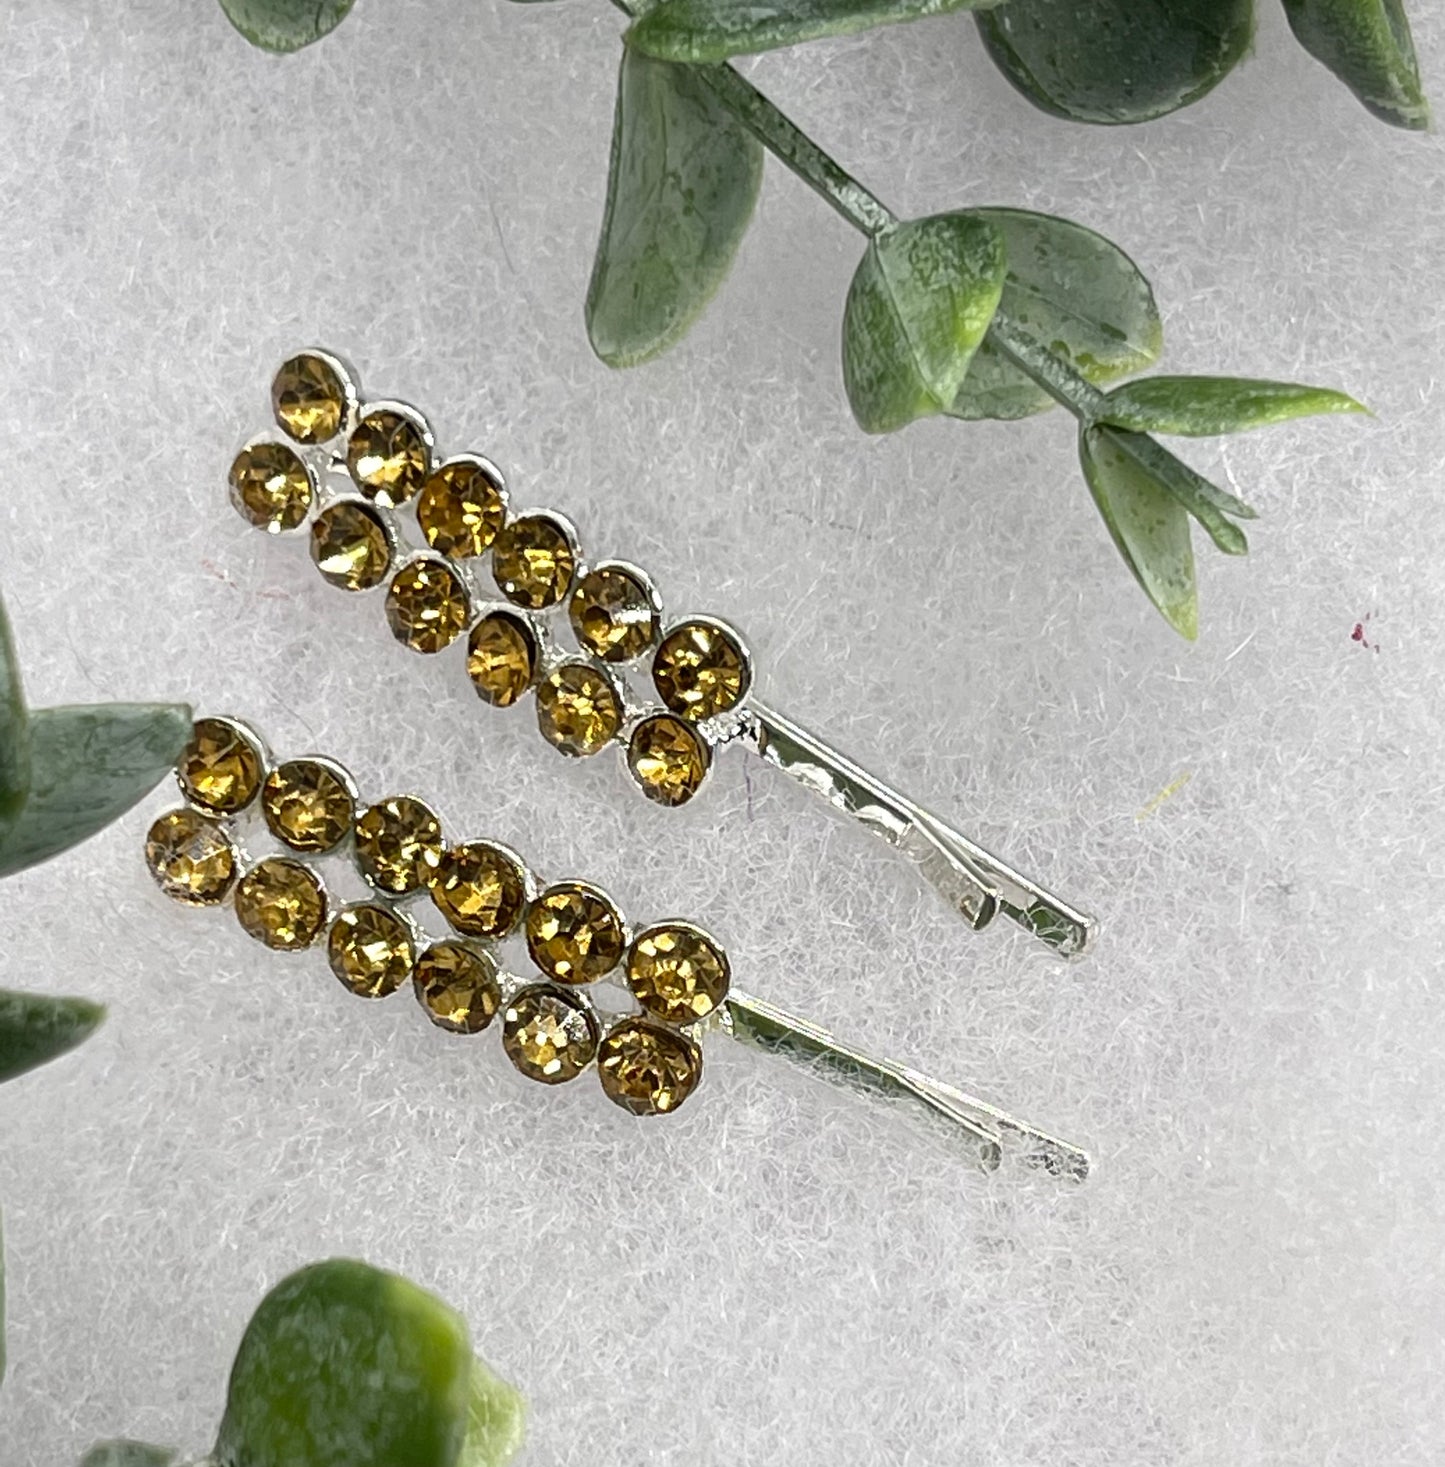 Gold Crystal Rhinestone Bobby pin hair pins set approximately 2.0”  silver tone formal hair accessory gift wedding bridal Hair accessory